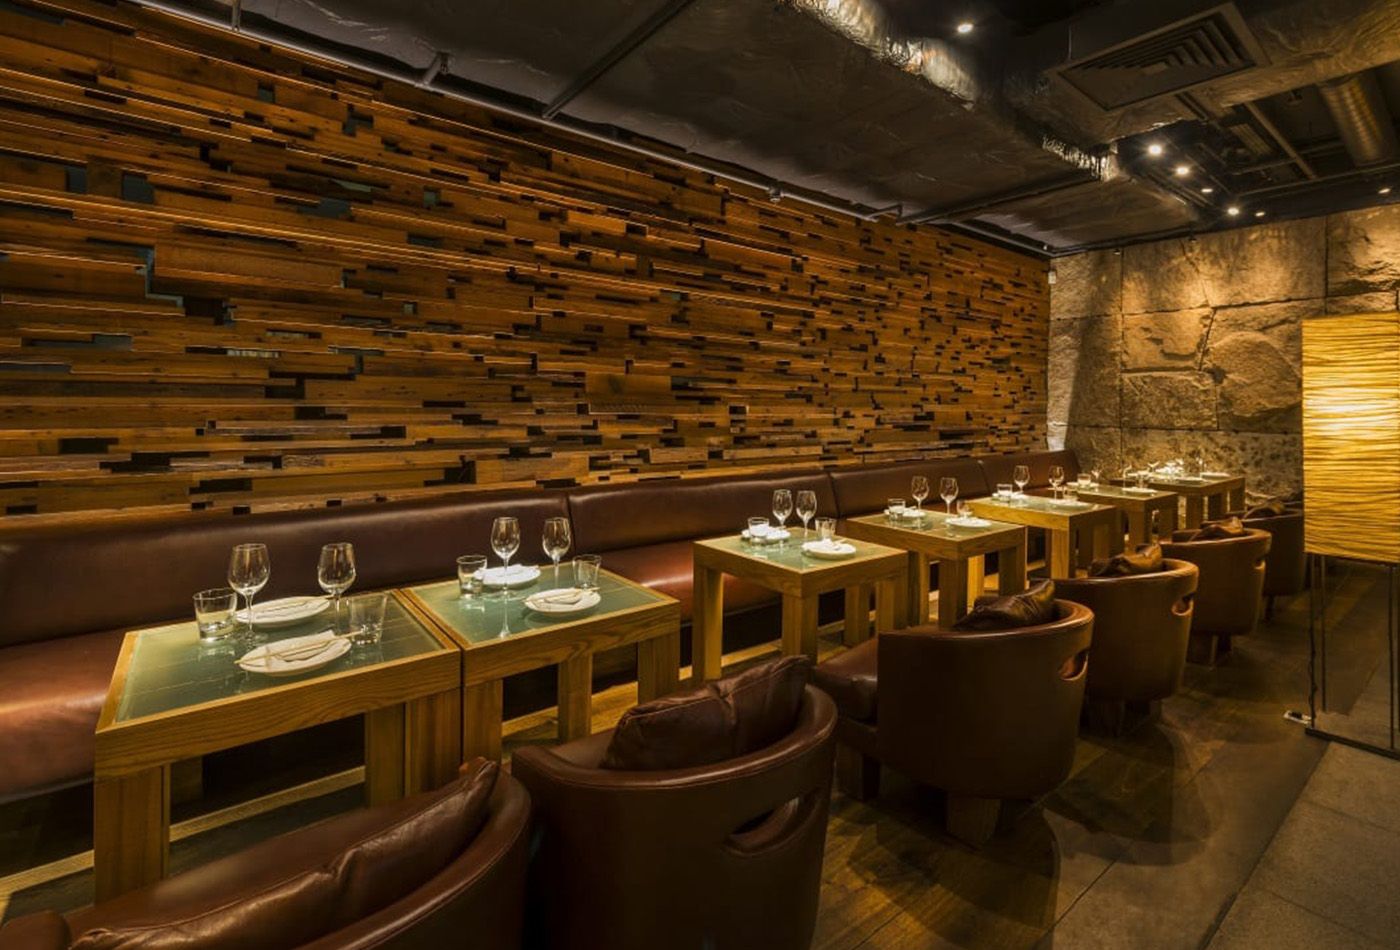 Zuma specialises in informal izakaya-style dining, themes of wood, stone, green and leather